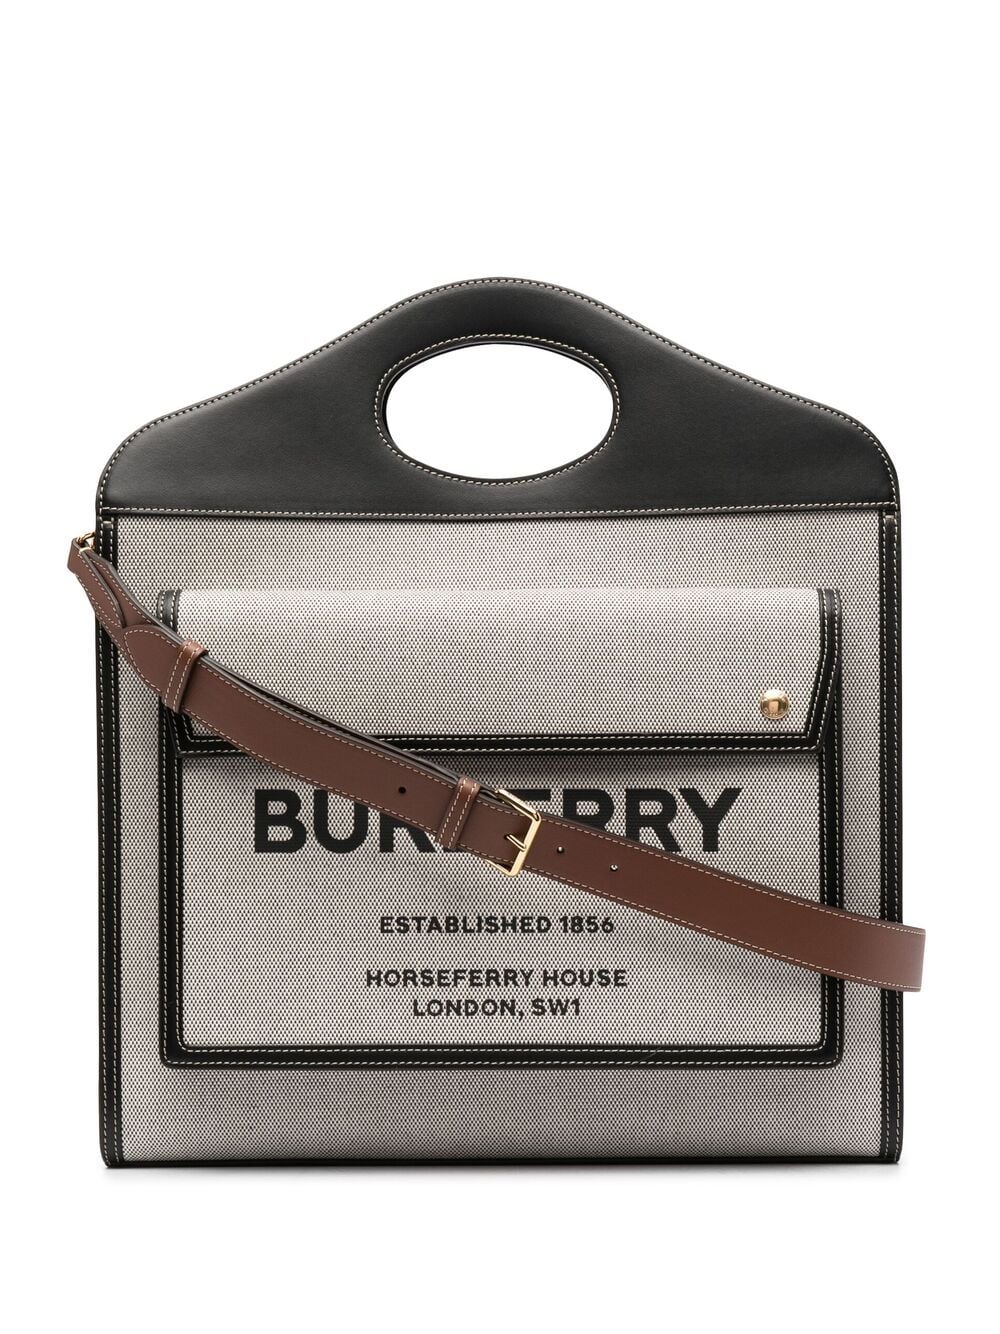 фото Burberry сумка pocket среднего размера